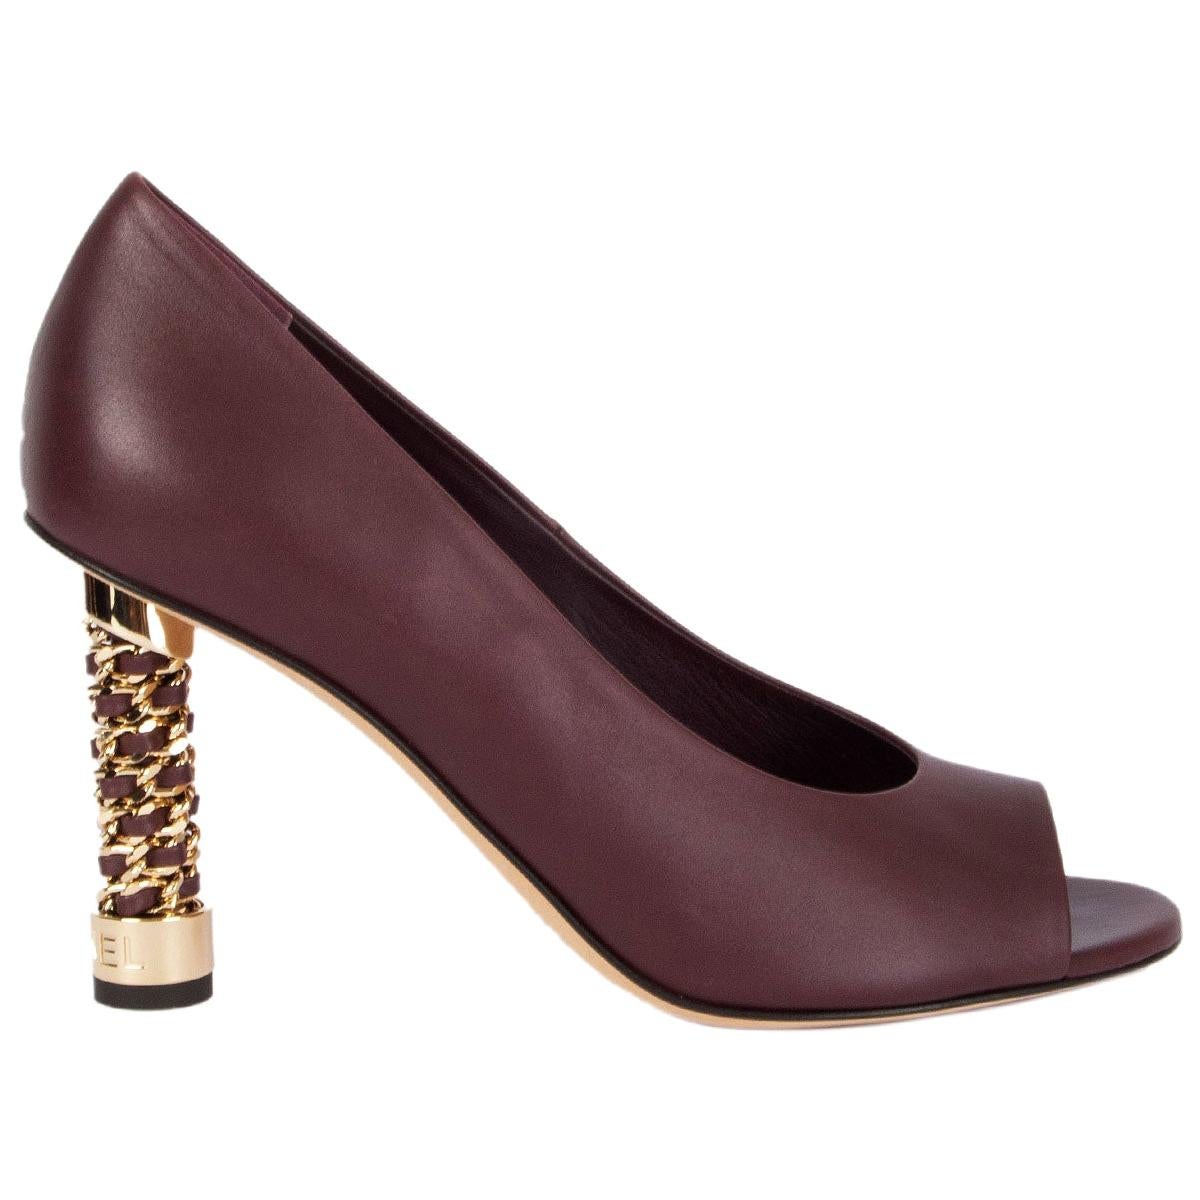 CHANEL burgundy leather CHAIN HEEL PEEP-TOE Pumps Shoes 38.5